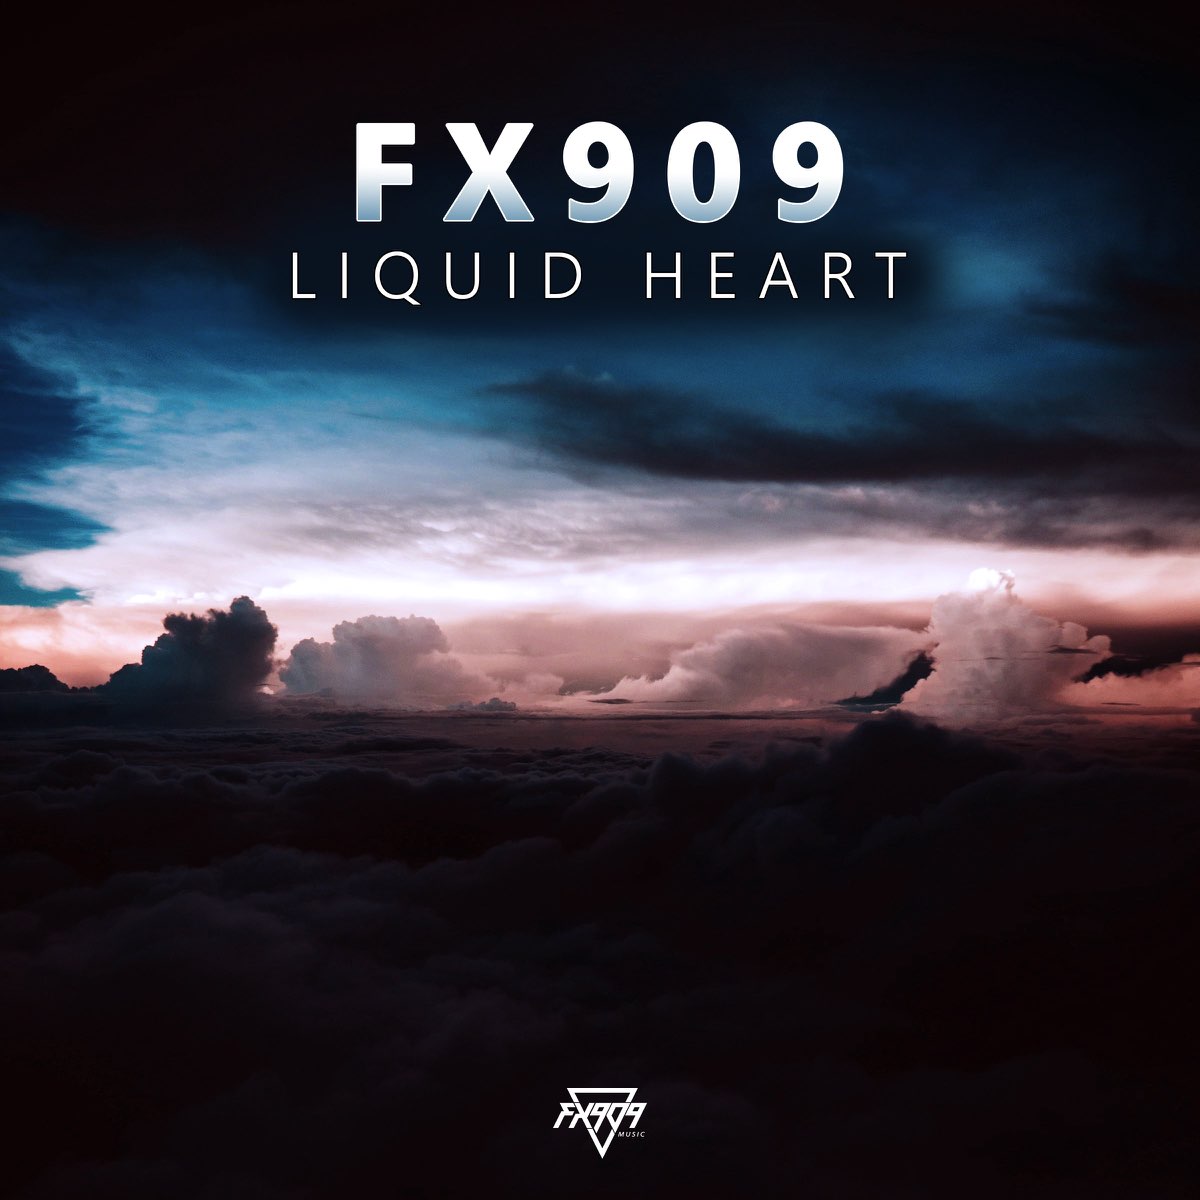 Liquid Heart by FX909 on Apple Music